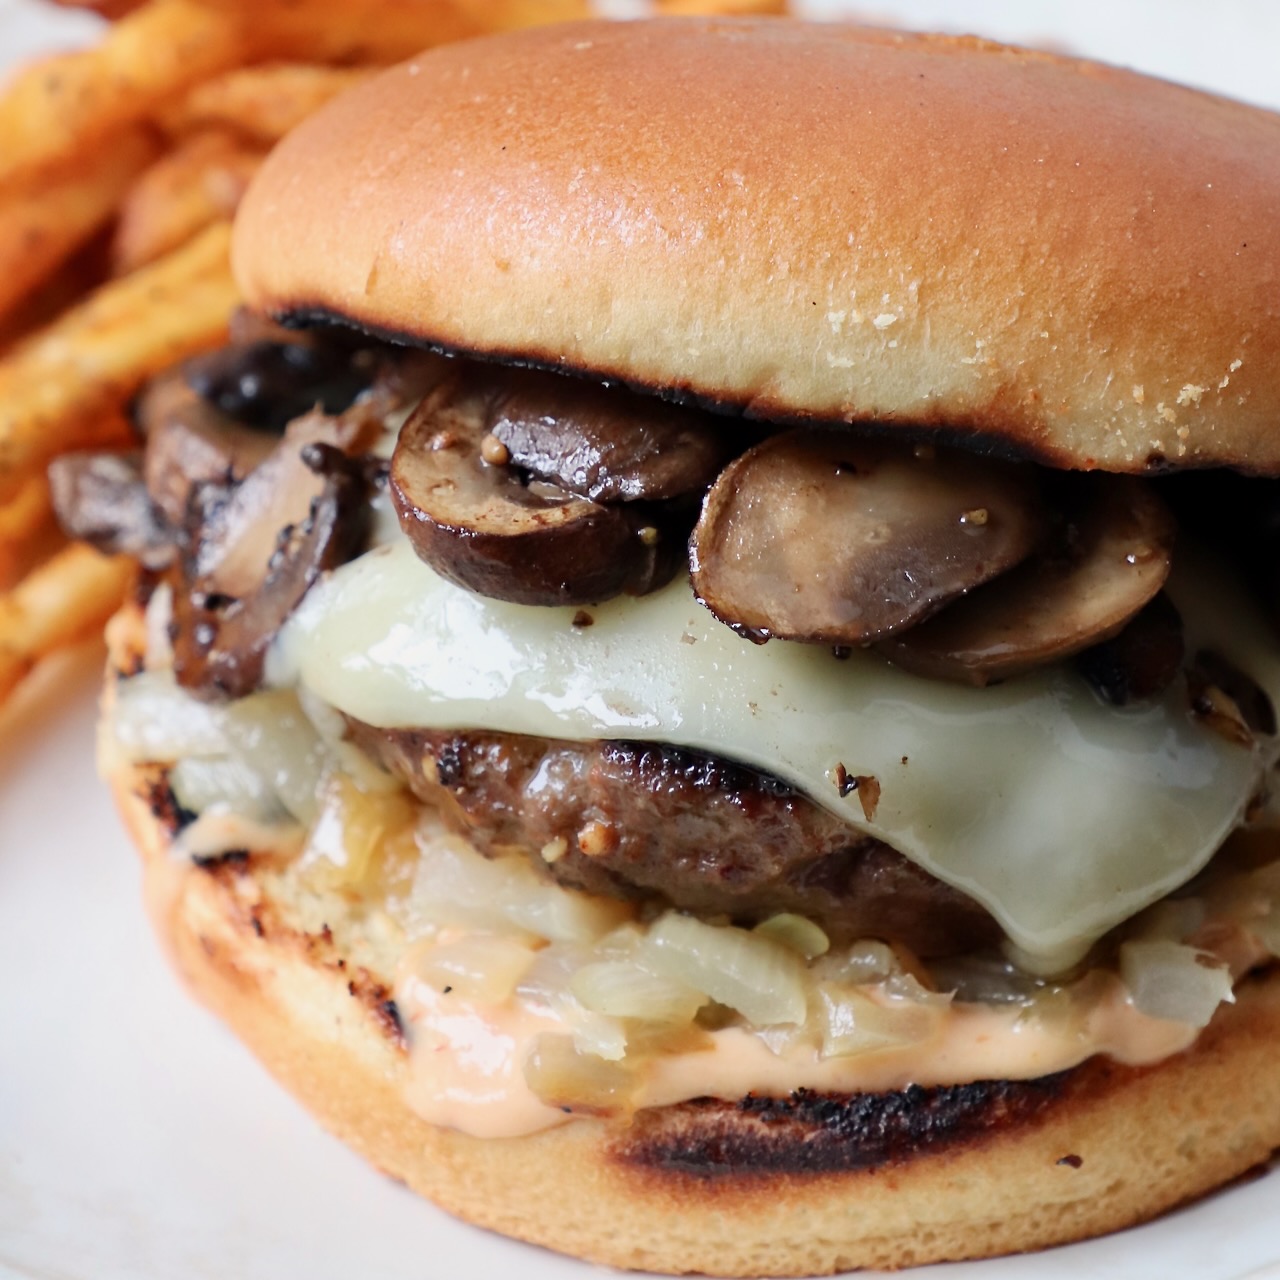 prepared mushroom swiss burger on plate with fries